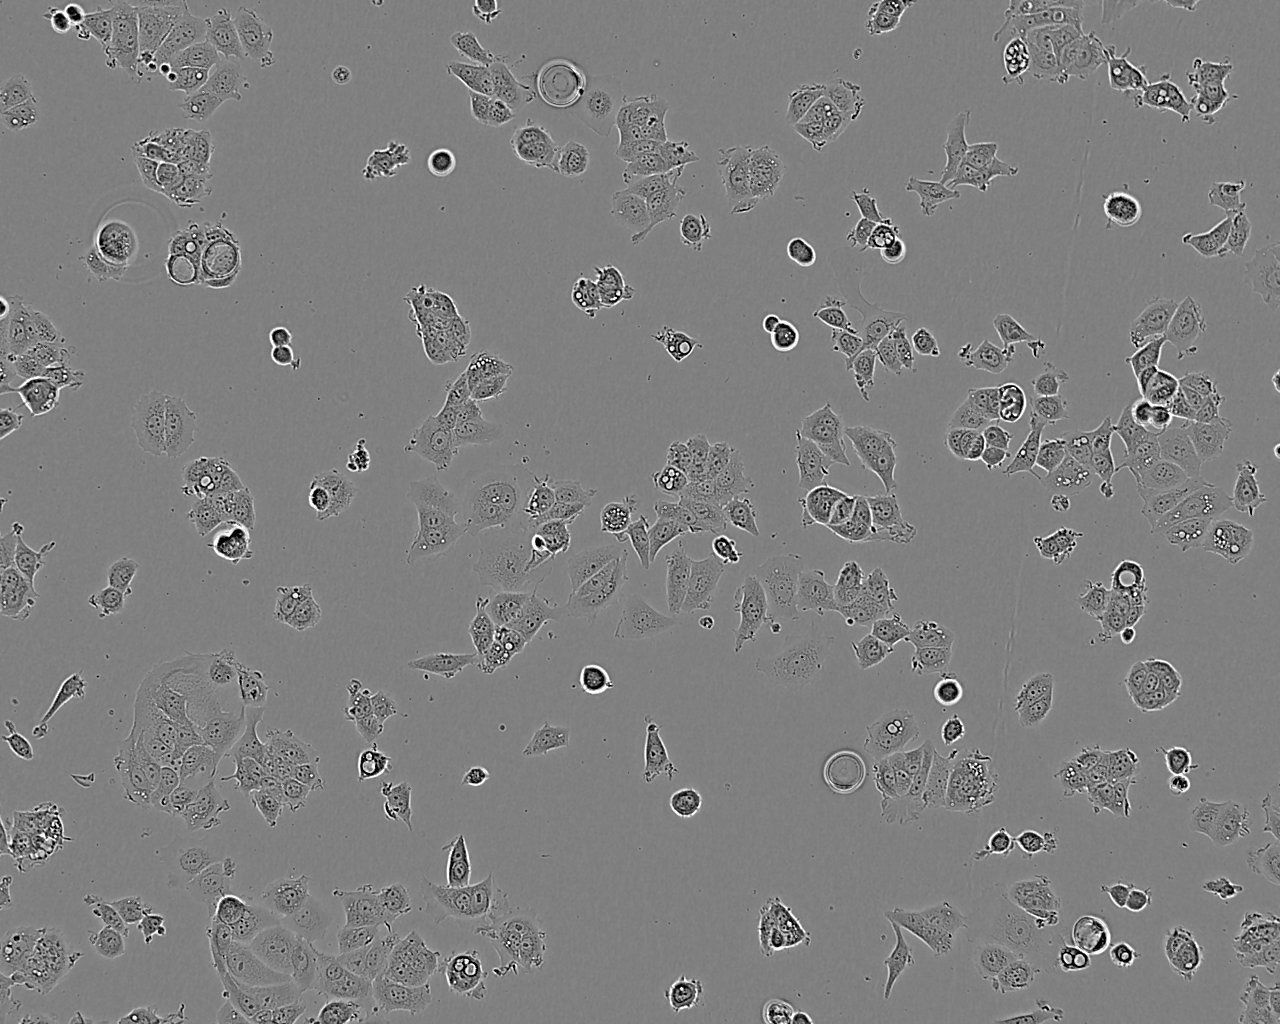 KNS-42 epithelioid cells人脑胶质瘤细胞系,KNS-42 epithelioid cells